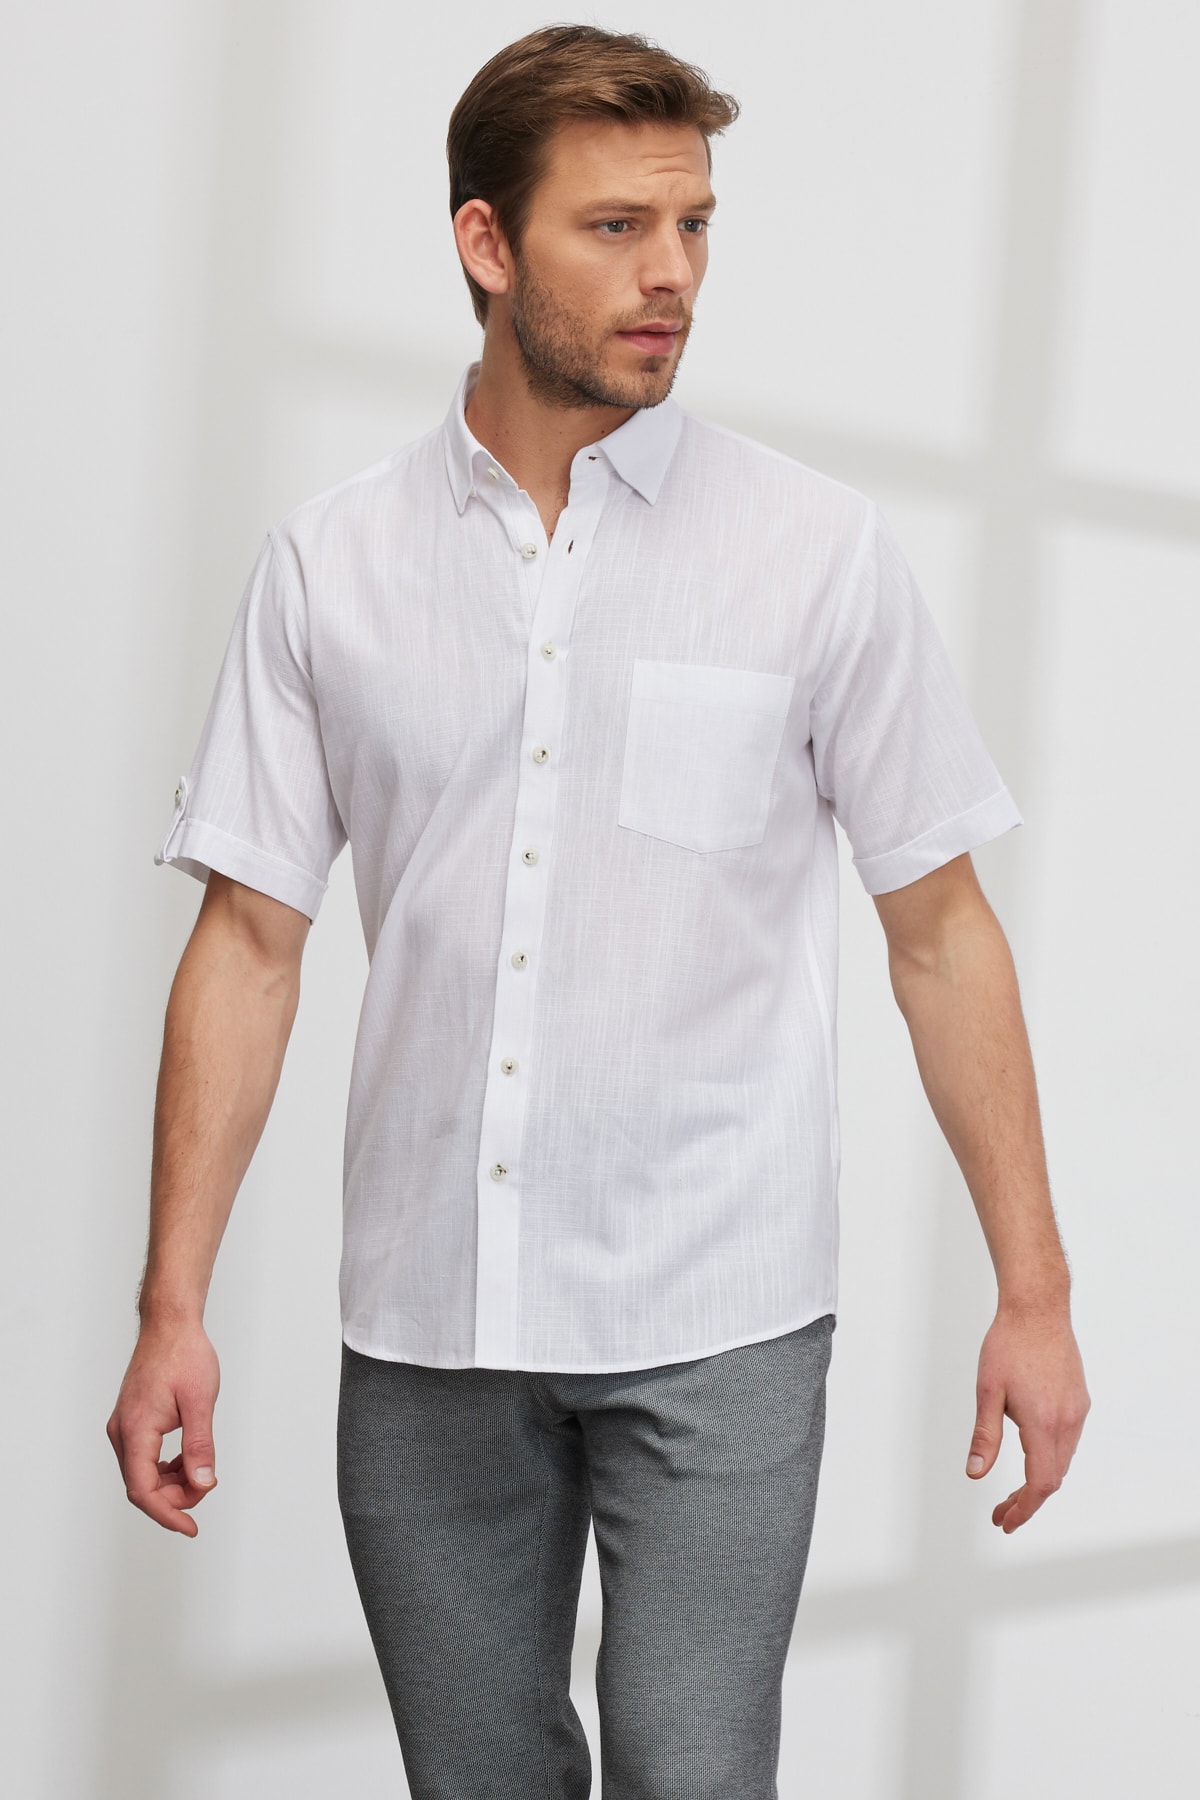 AC&Co / Altınyıldız Classics Men's White Comfort Fit Easy-Cut Collar with Buttons Linen-Looking 100% Cotton Short Sleeve Shirt.